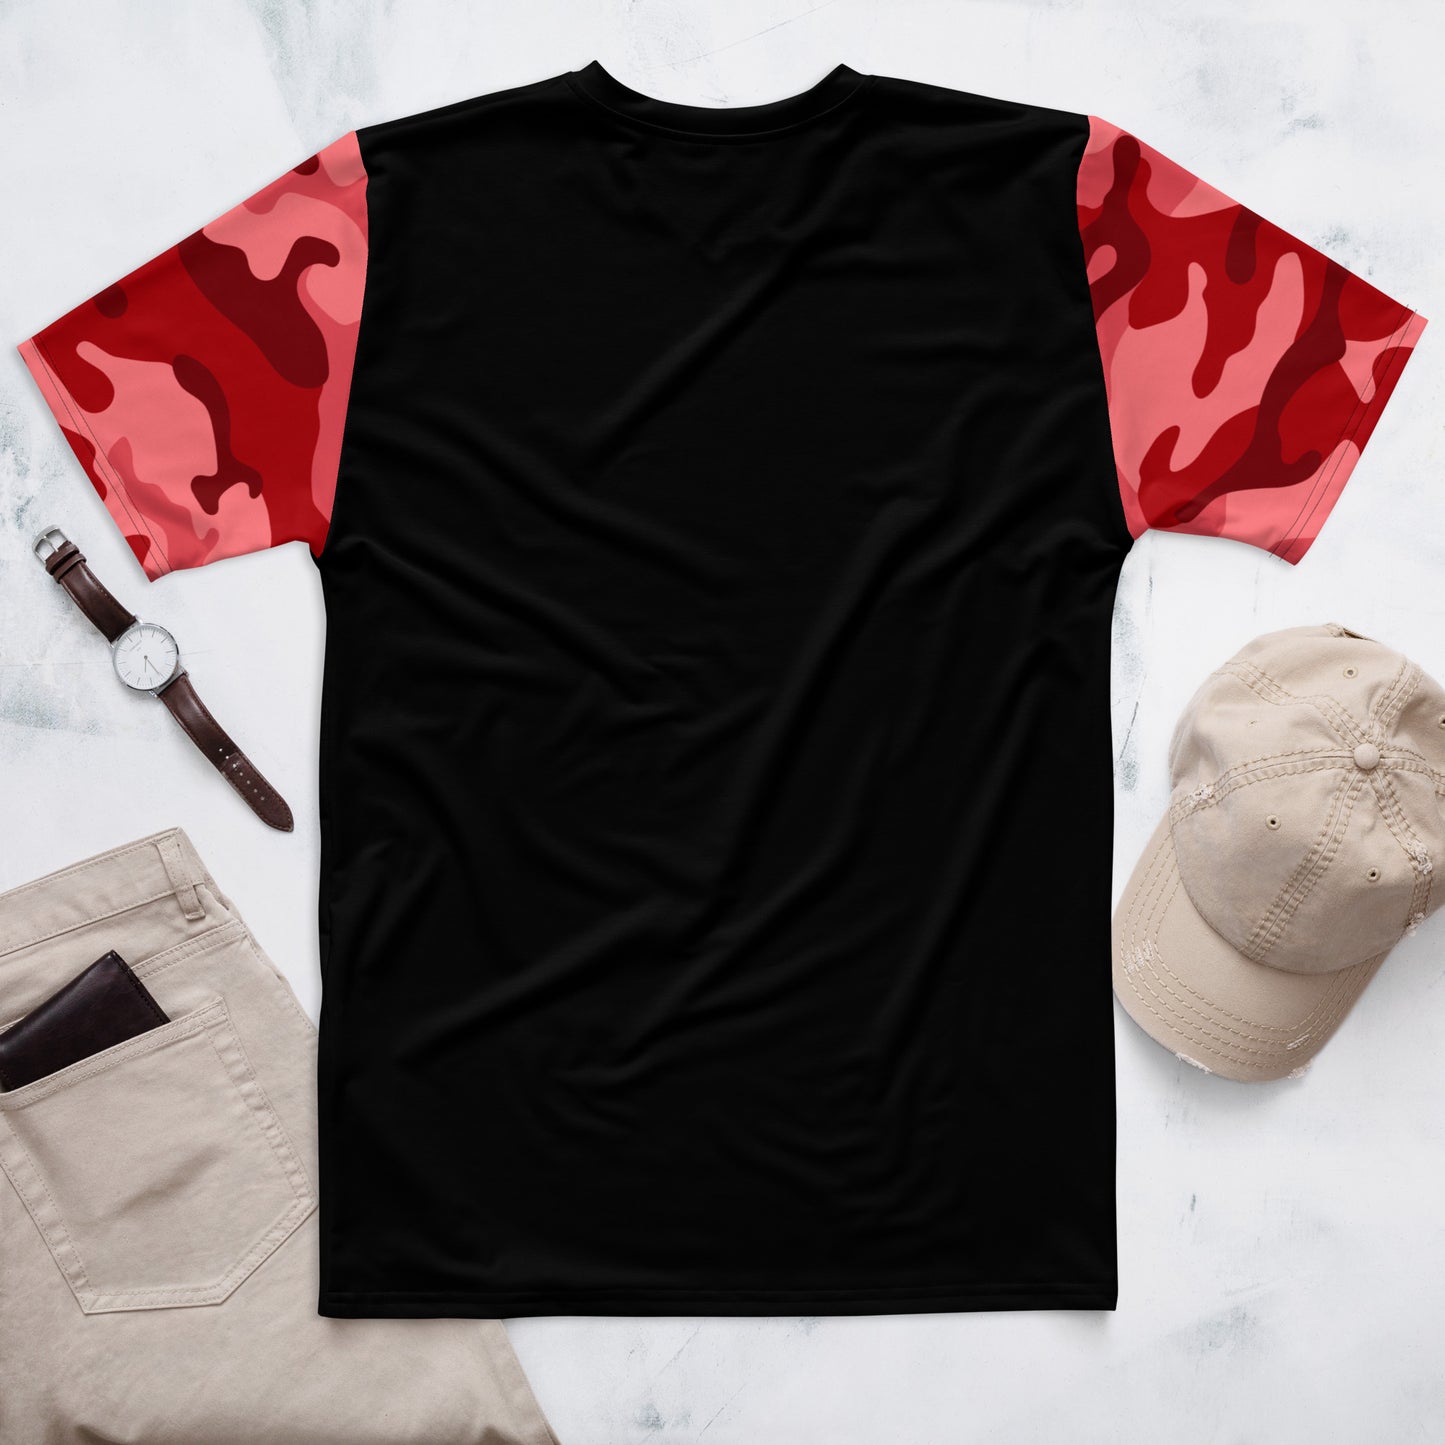 BASC RED CAMO Men's t-shirt